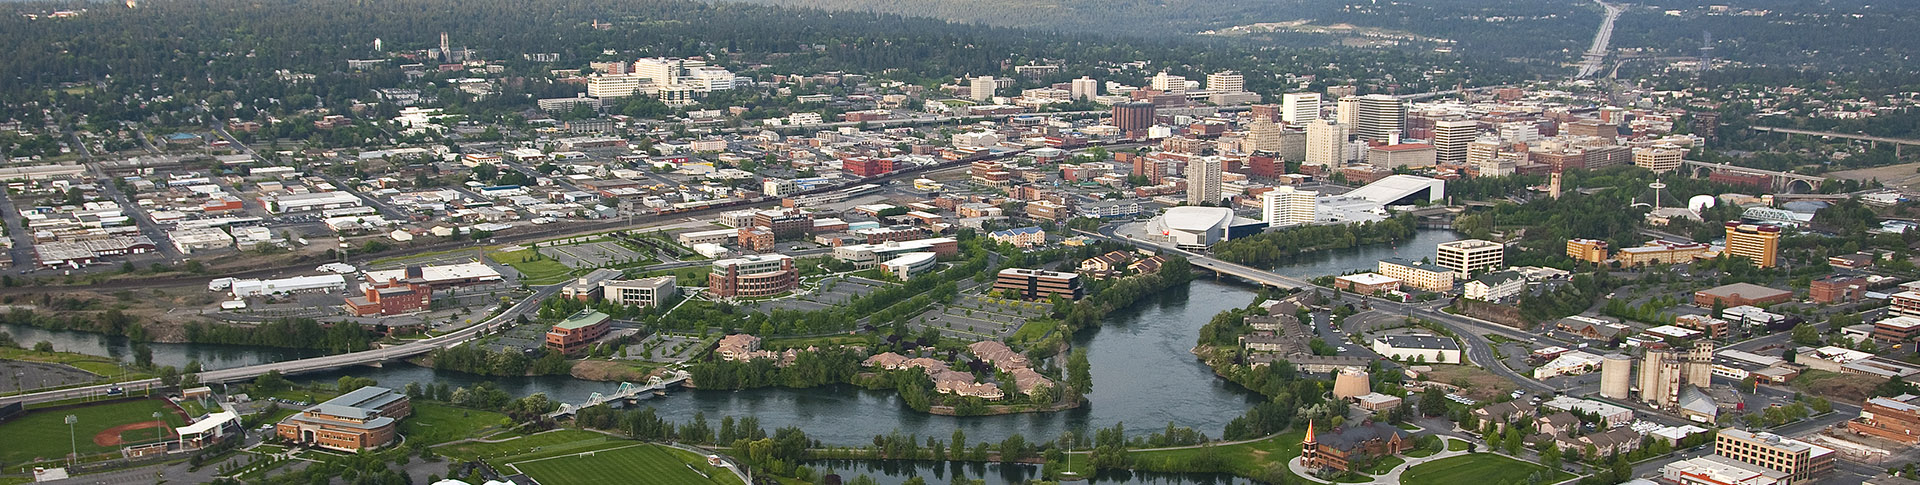 Spokane Aerial Photo